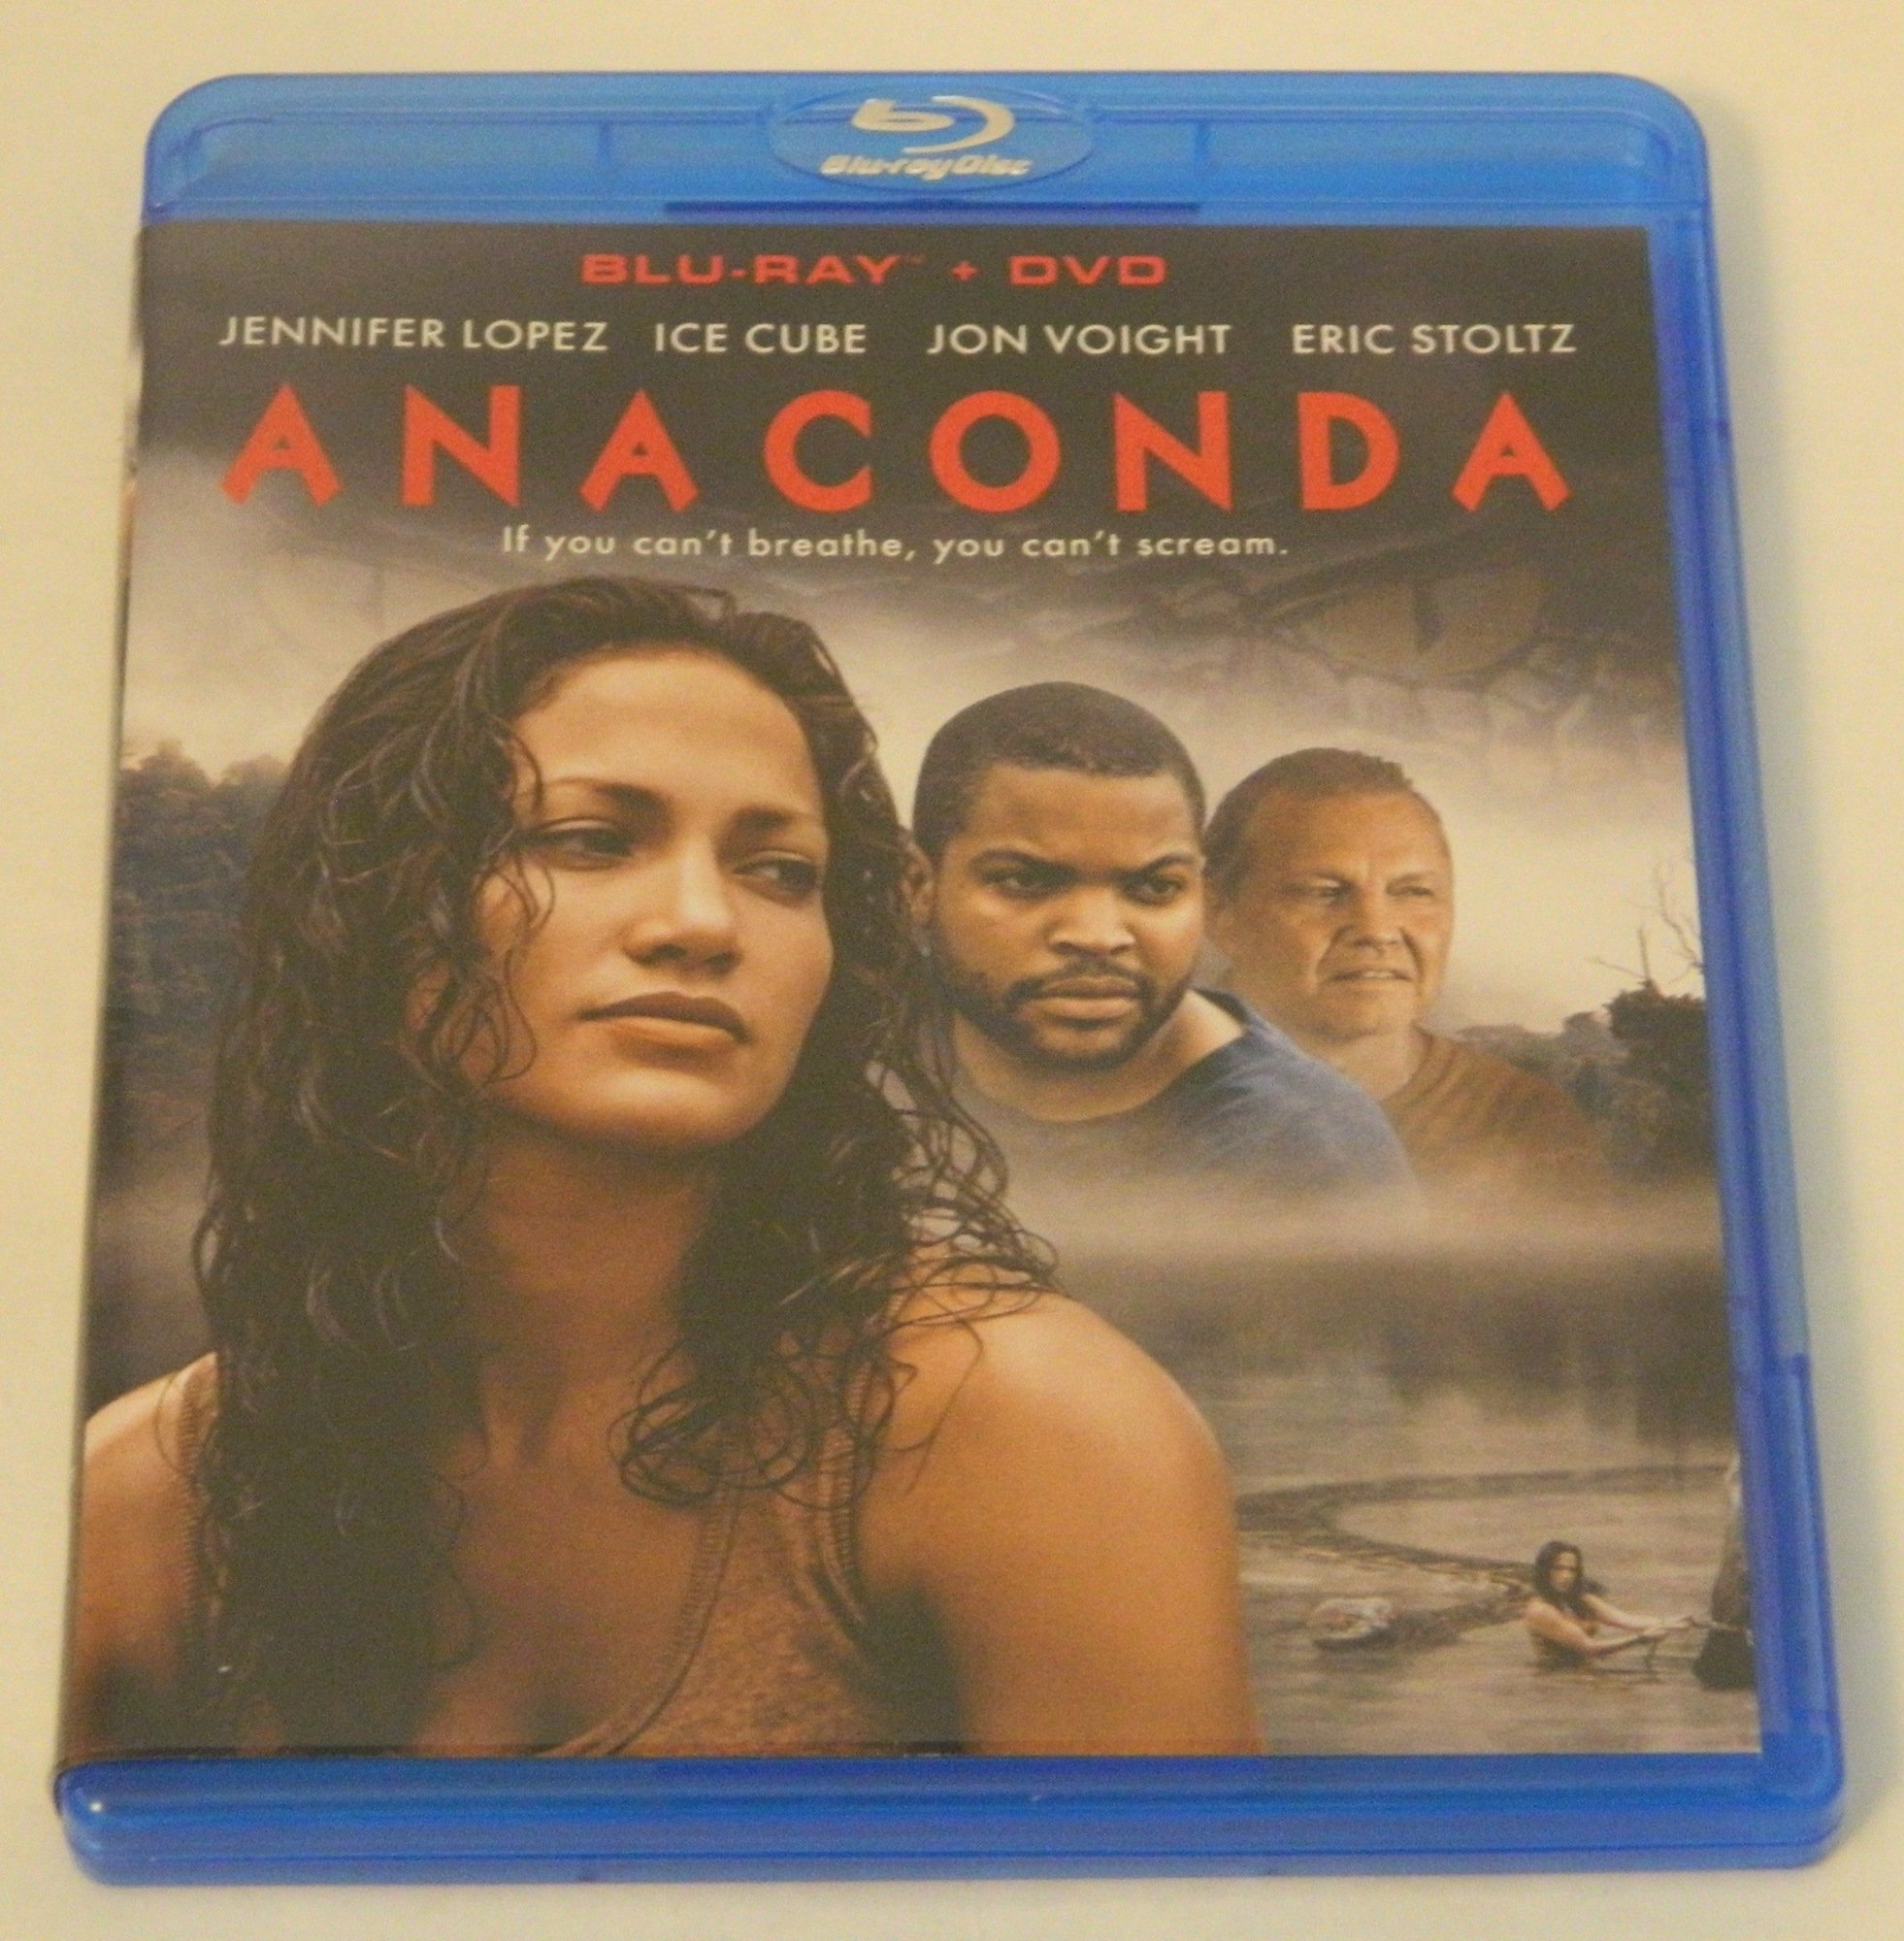 Anaconda (1997) Blu-ray Review